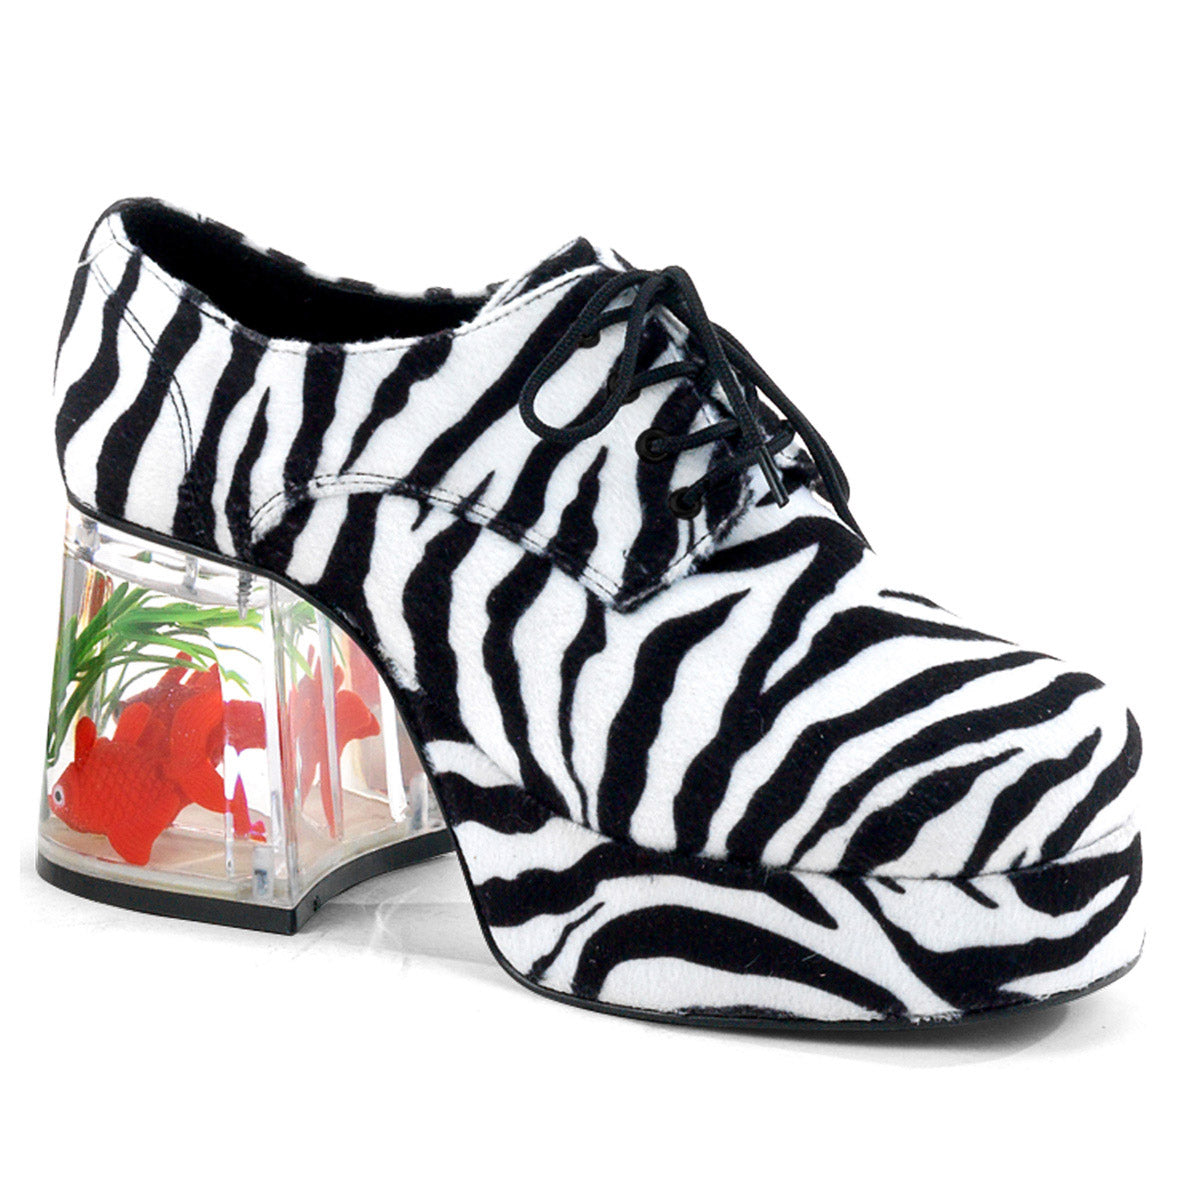 Disco Fever Floating Fish Heels Platform Oxford Lace Up Boots Shoes Pleaser Funtasma PIMP/02